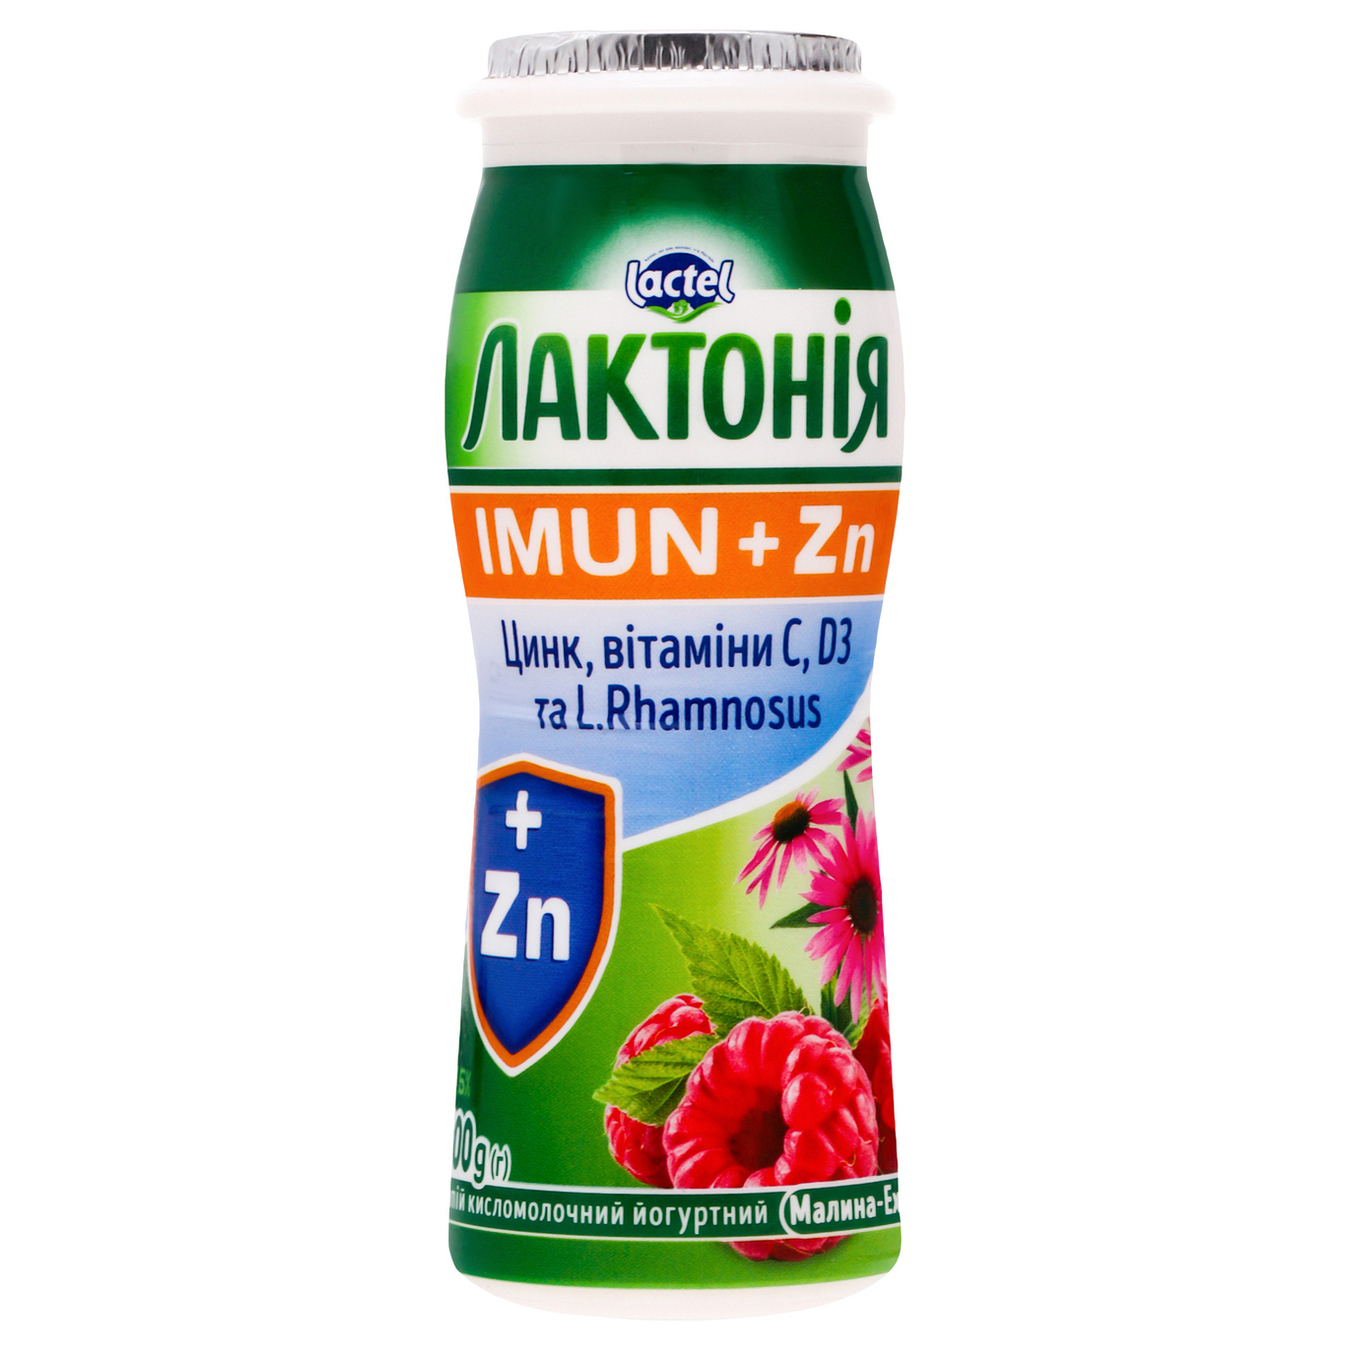 Laktoniya Imun+Zn Raspberry-echinac fermented milk 1,5% 100g